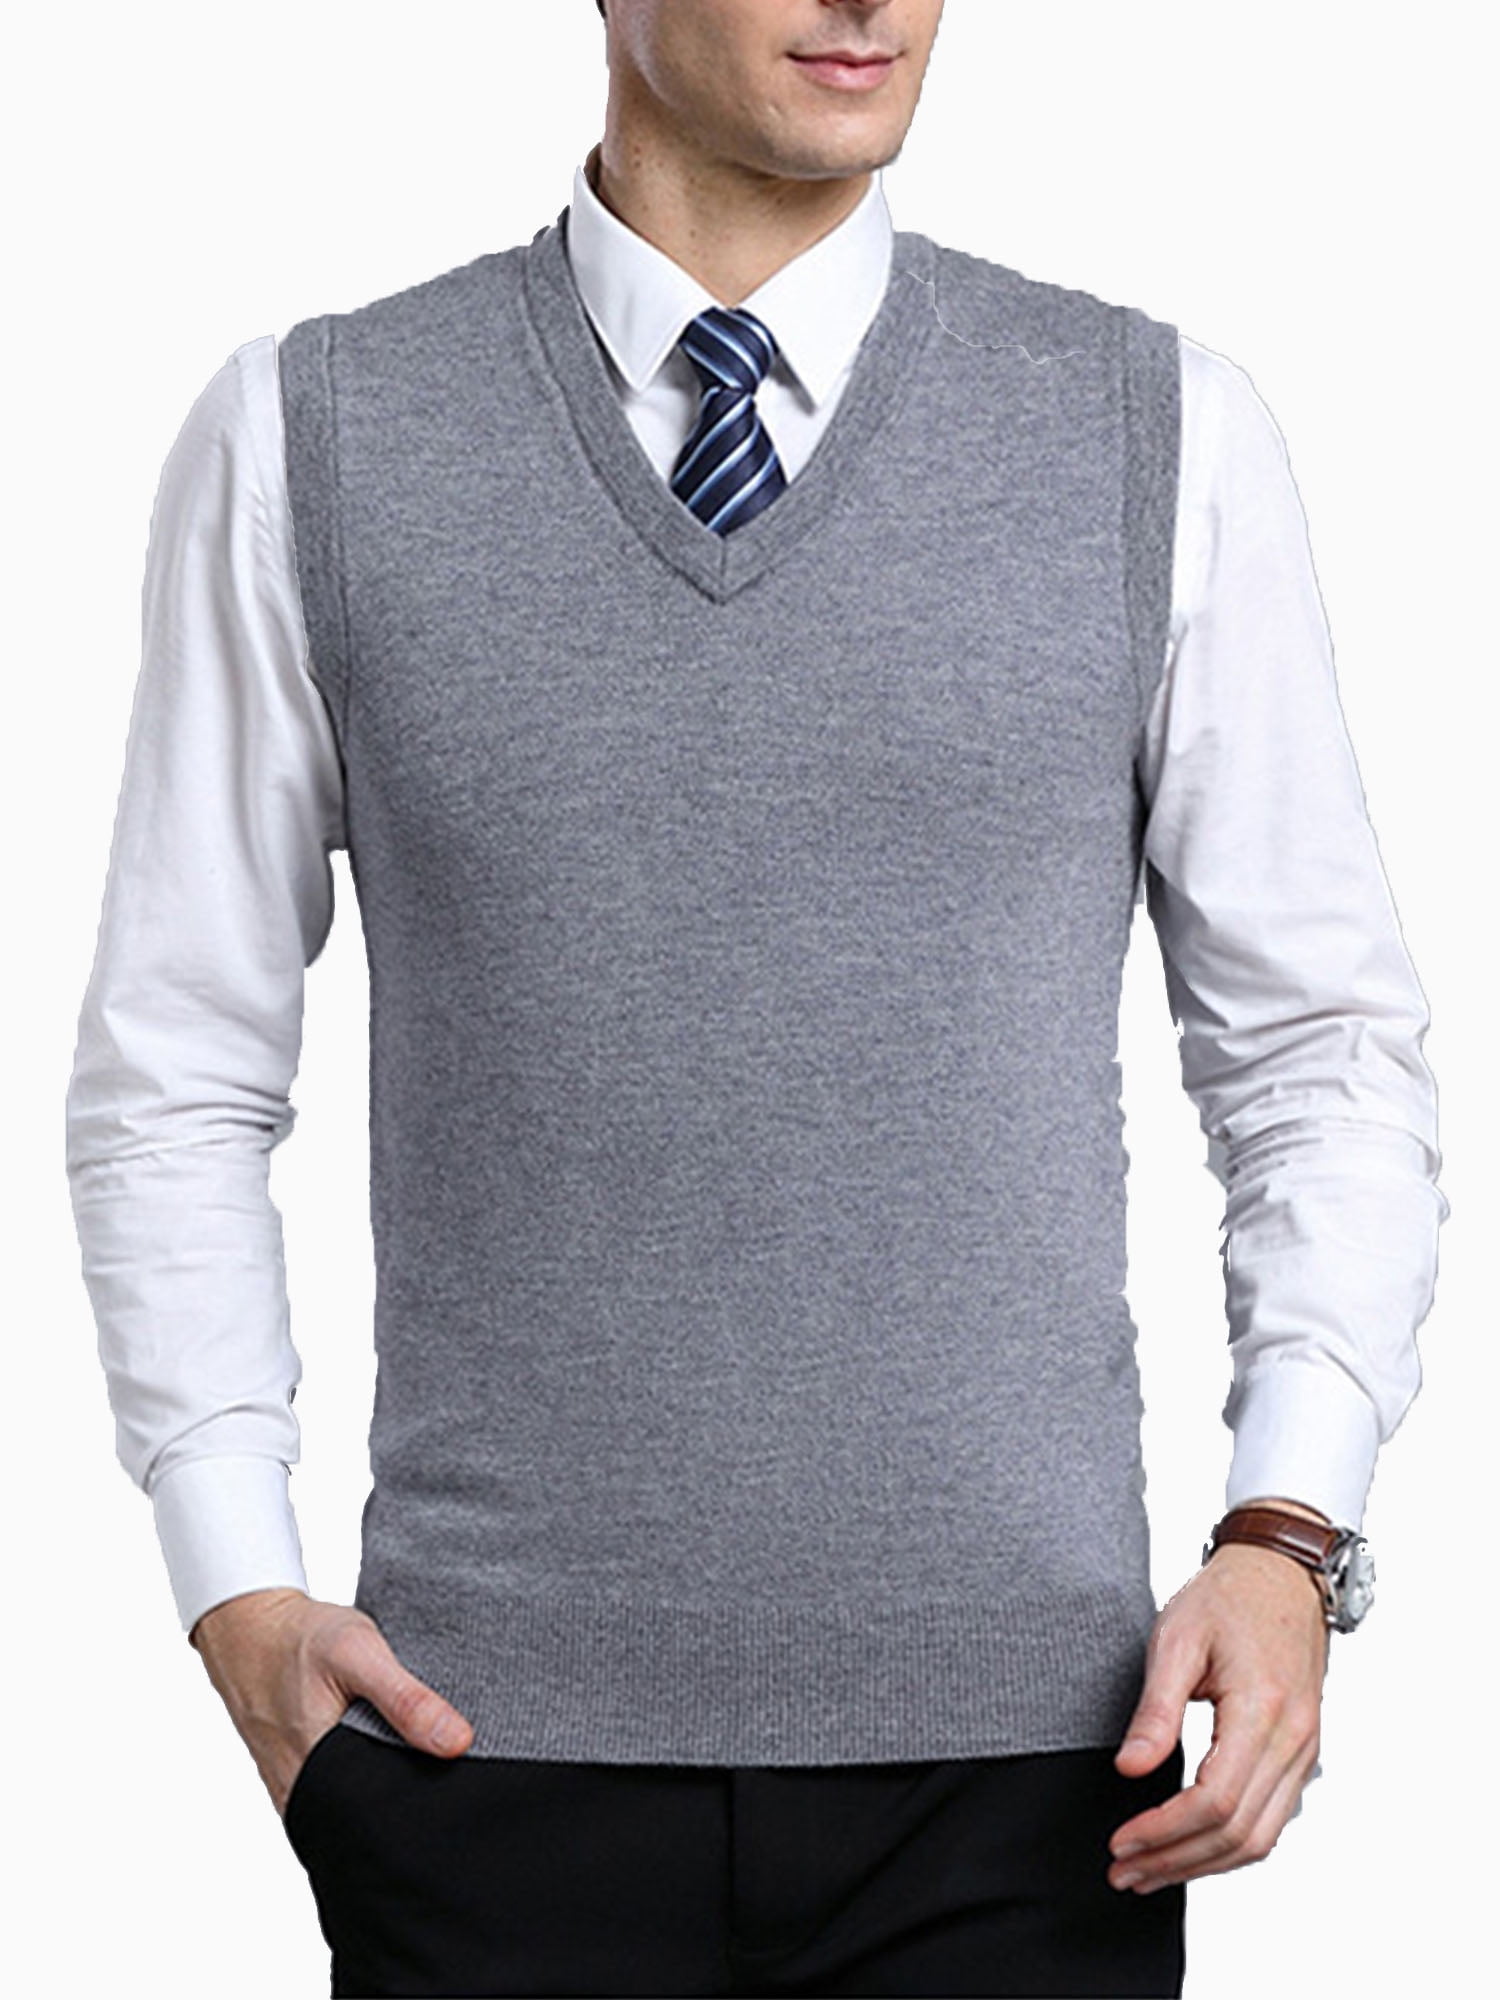 Zimaes-Men Sleeveless Open Fit Knit Solid Comfort Soft Basic Style Vest